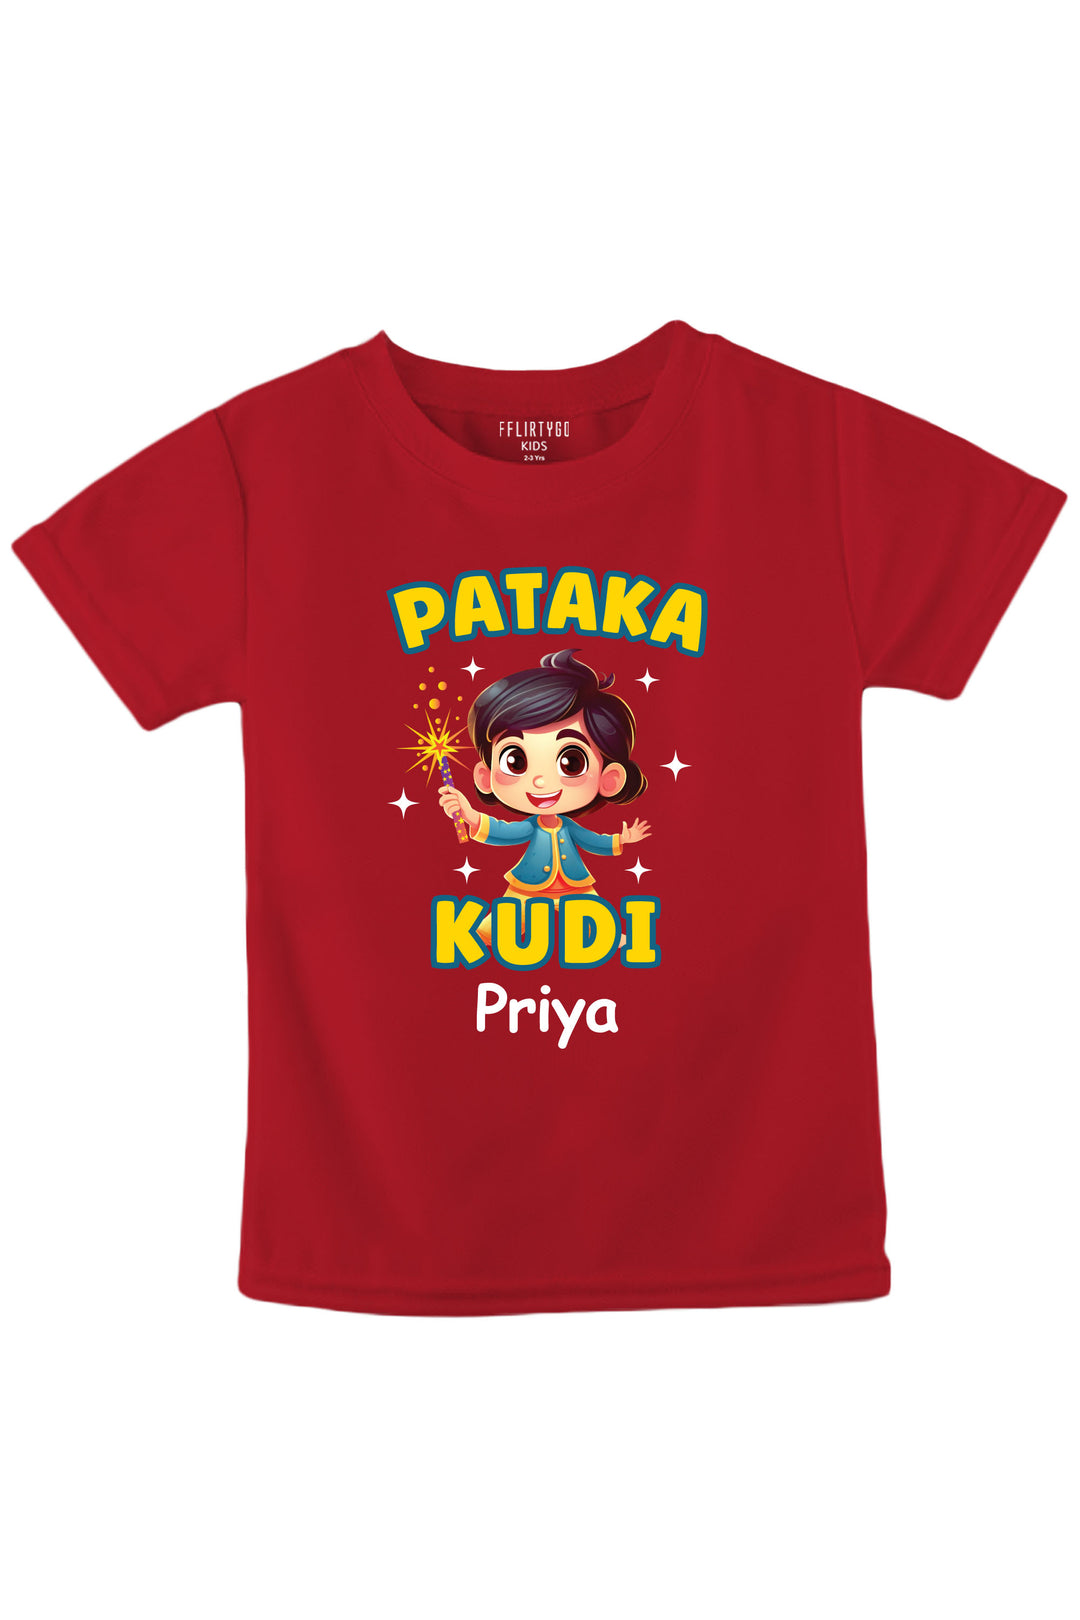 Pataka Kudi Kids T Shirt w/ Custom Name